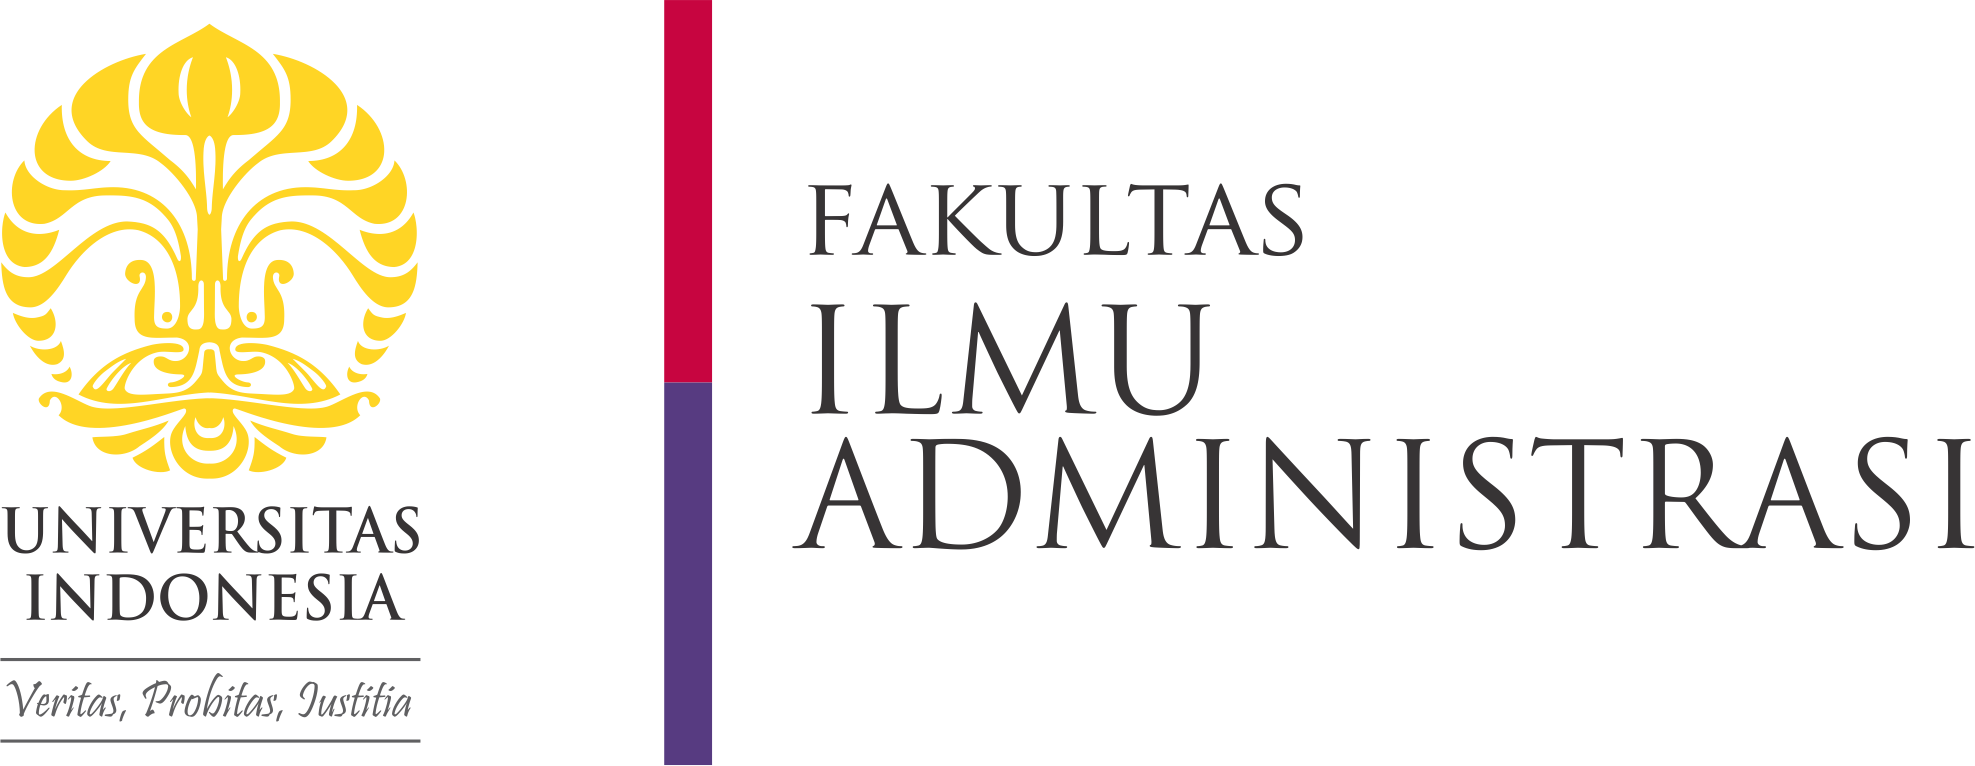 Faculty of Administrative Sciences Universitas Indonesia logo